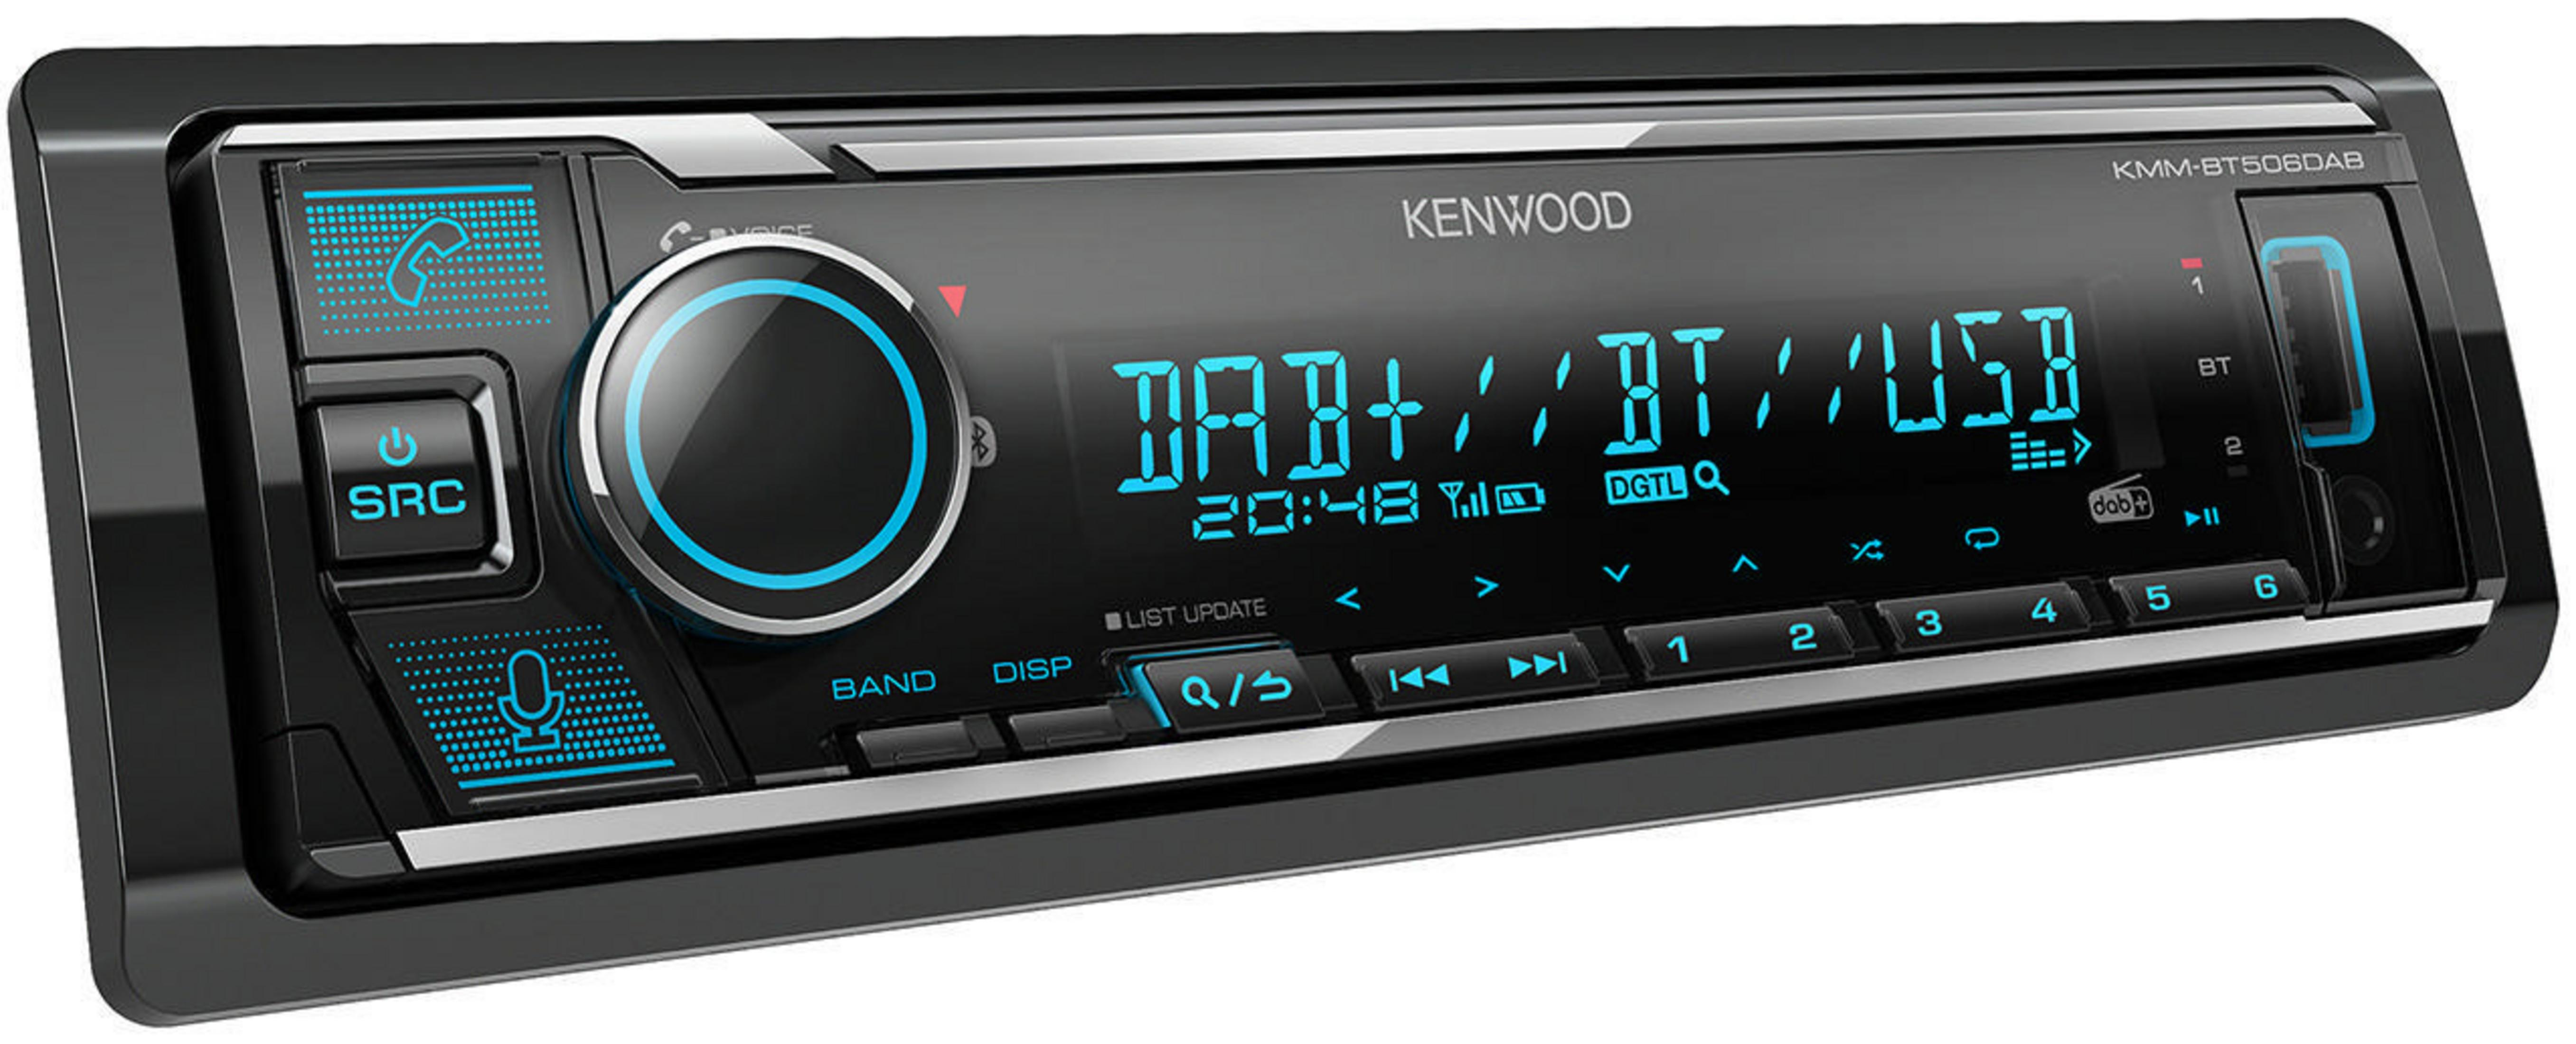 KENWOOD KMM-BT 506 DIN, 50 DAB Watt 1 Autoradio